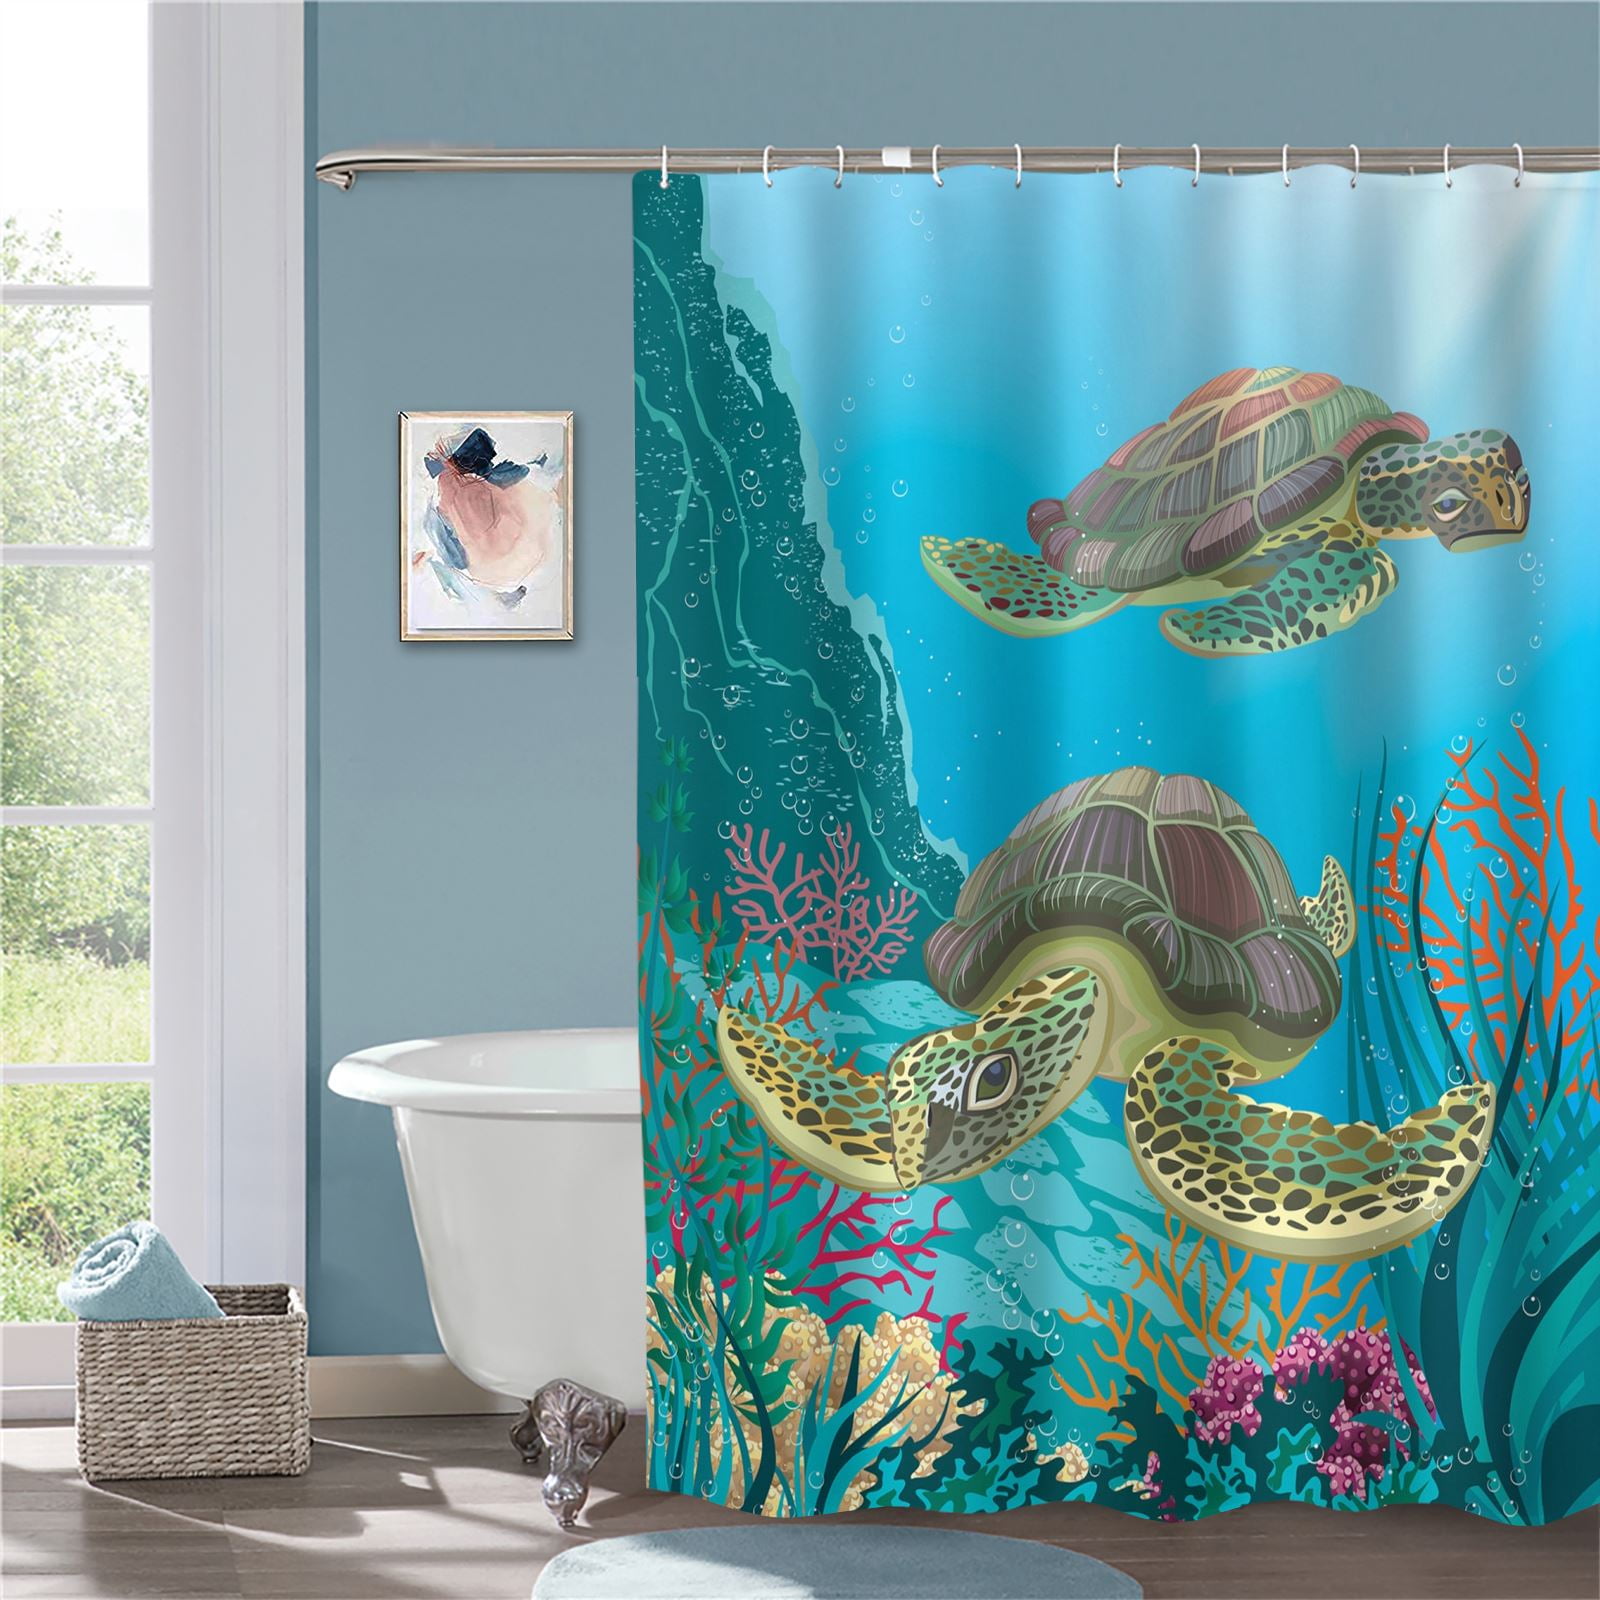 Sea Animals Decor Illustration Of Two Sea Turtles Swimming Underwater  Aquatic Fabric Shower Curtain for Bathroom,72x72 